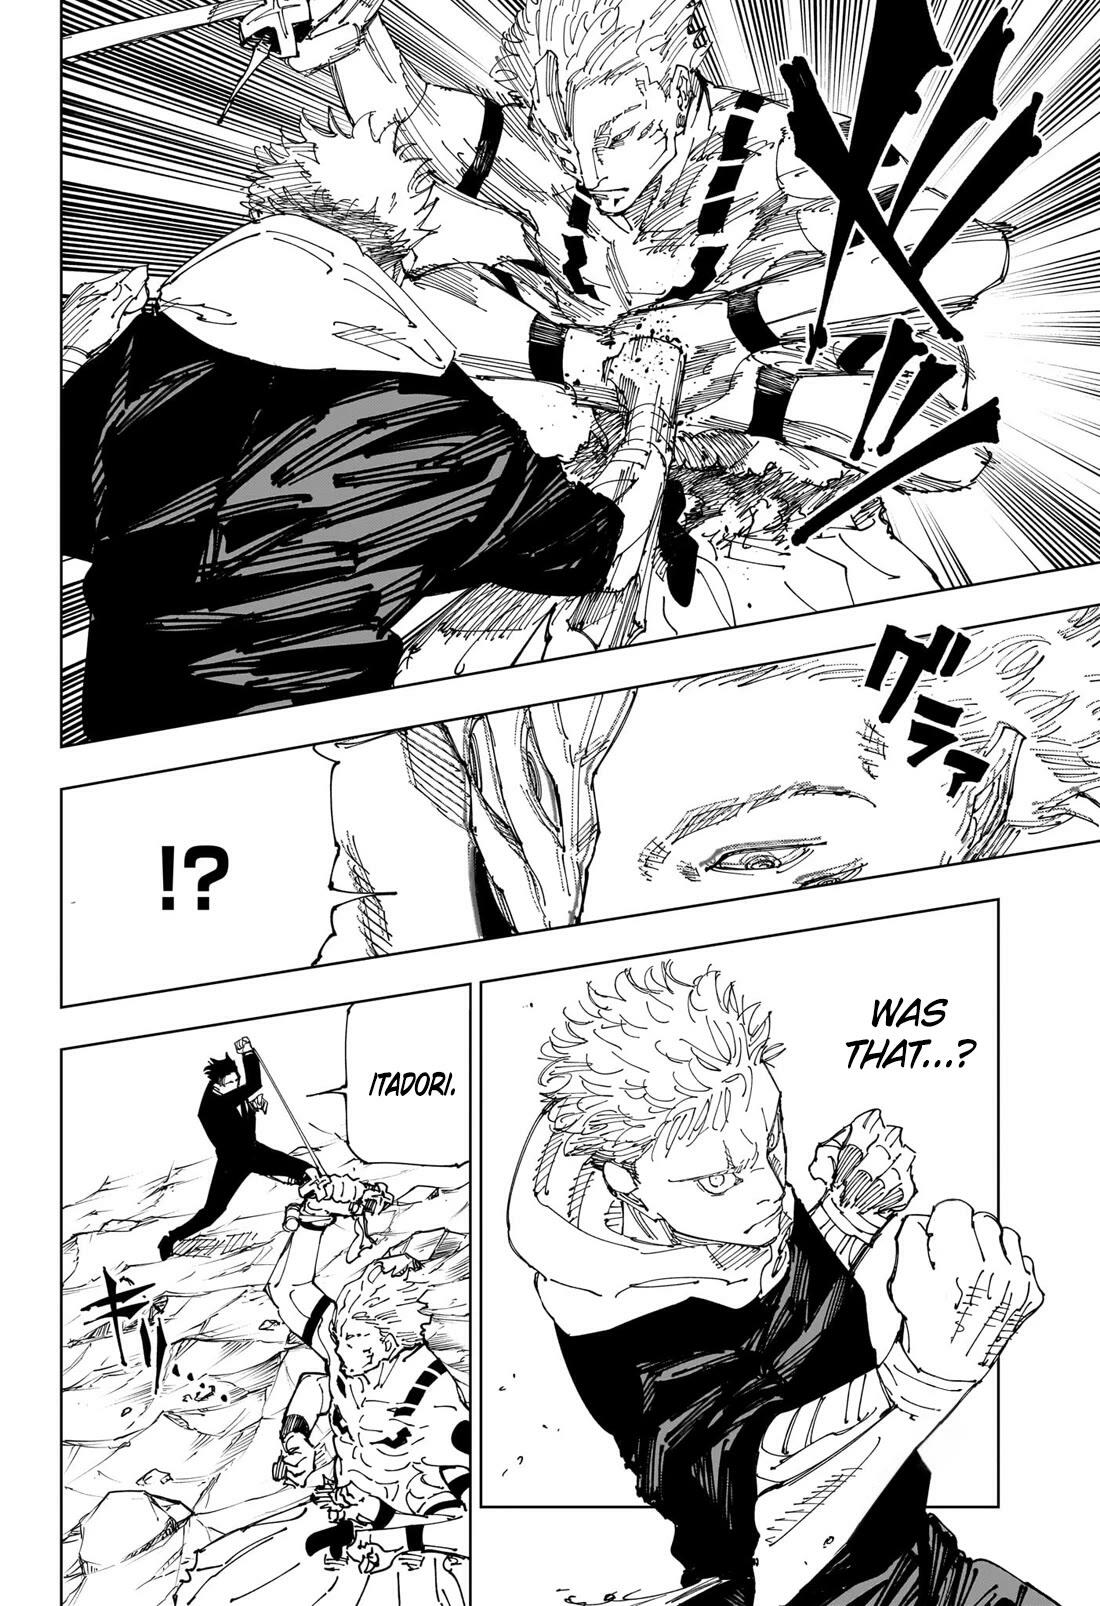 Jujutsu Kaisen Chapter 244: The Decisive Battle In The Uninhabited, Demon-Infested Shinjuku ⑯ page 17 - Mangakakalot